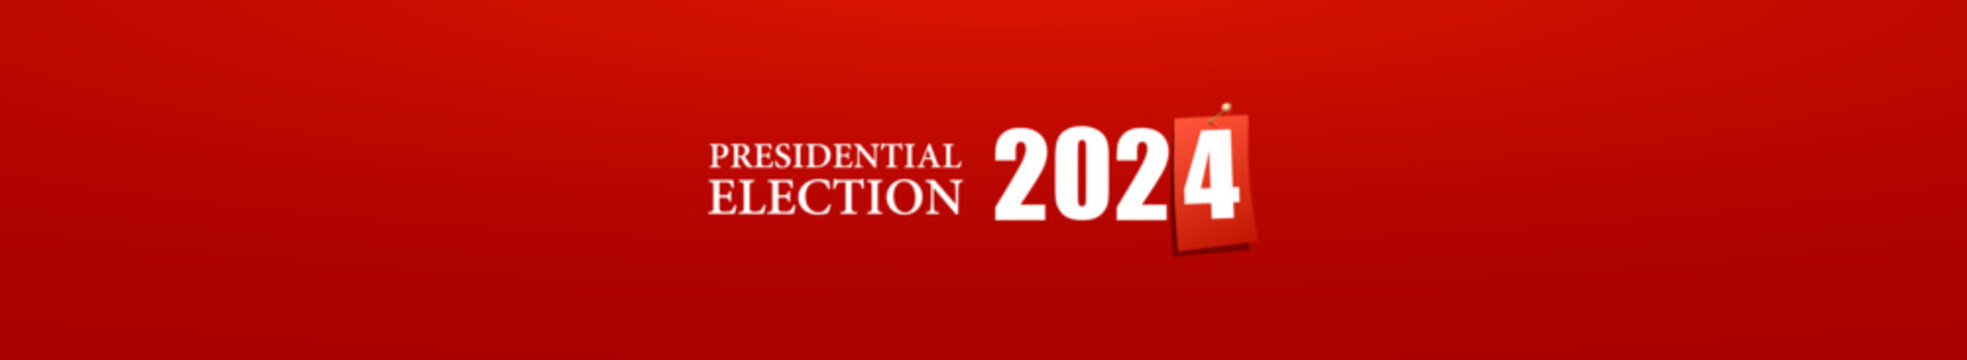 Voting Symbols vector design presidential election 2024. Red banner. Horizontal vector illustration